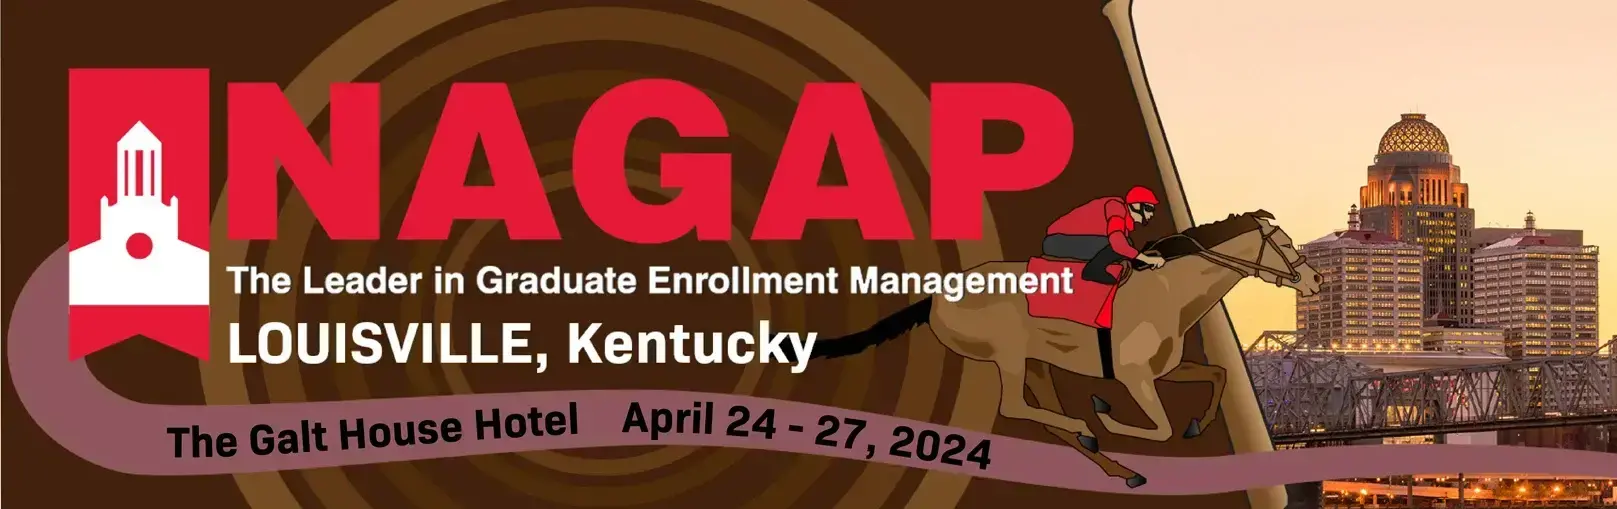 NAGAP 2024 Graduate Enrollment Management Summit image, a man riding a horse and conference text.